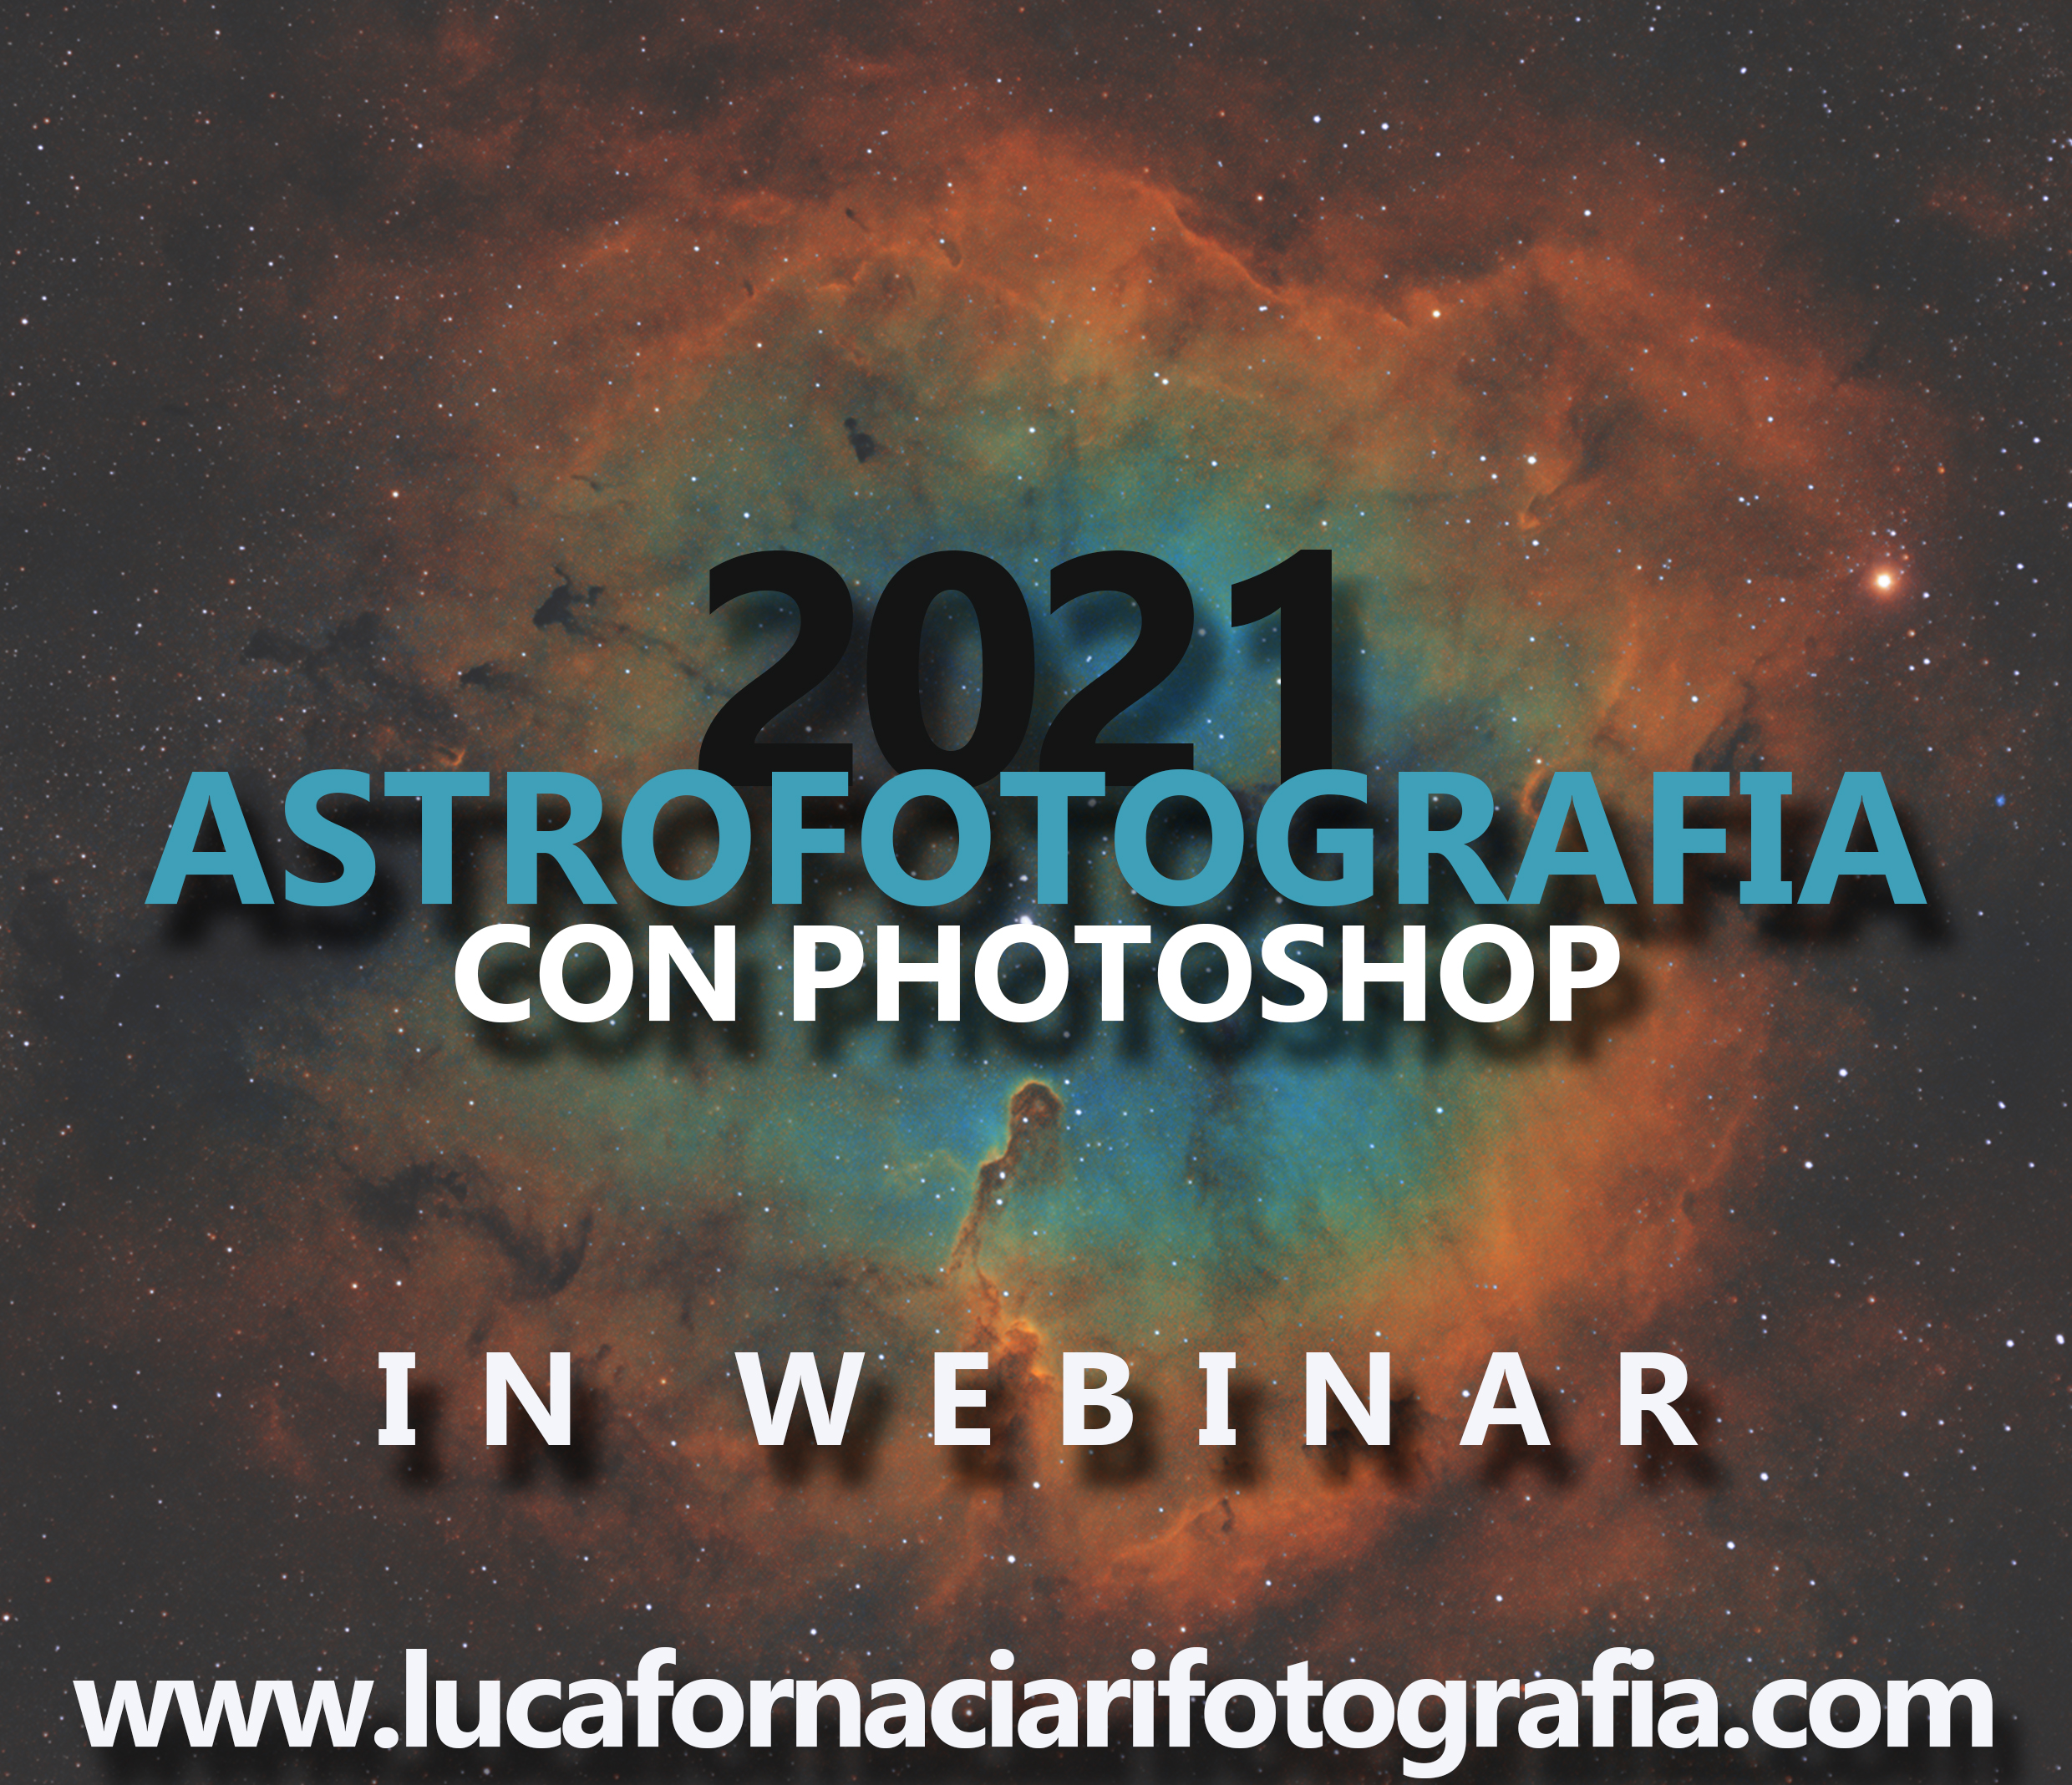 Astrofotografia con Adobe Photoshop 2021